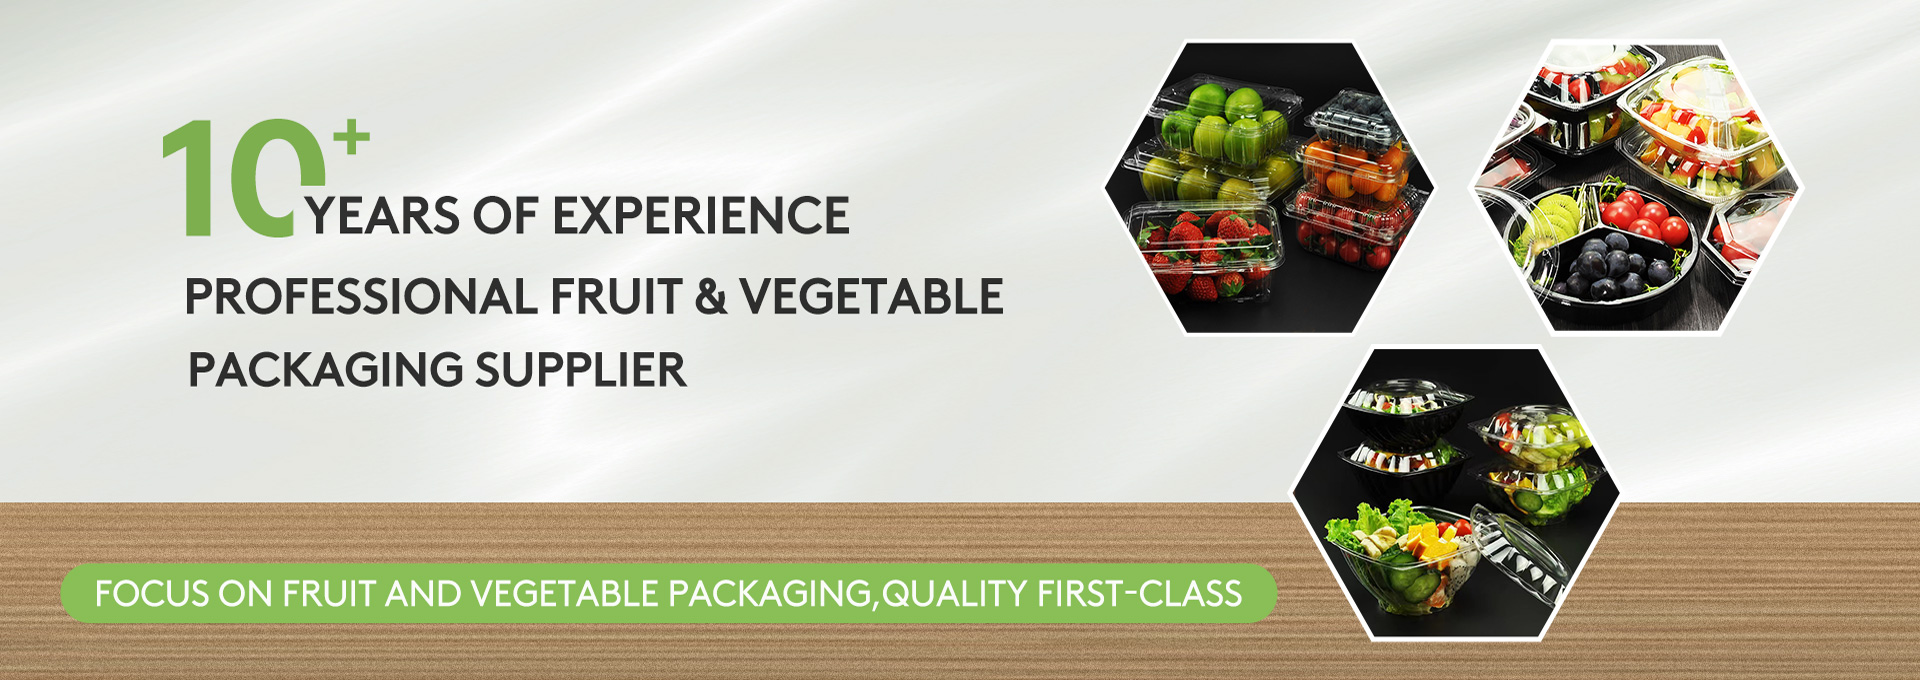 Fruit & Vegetable Packaging Supplier